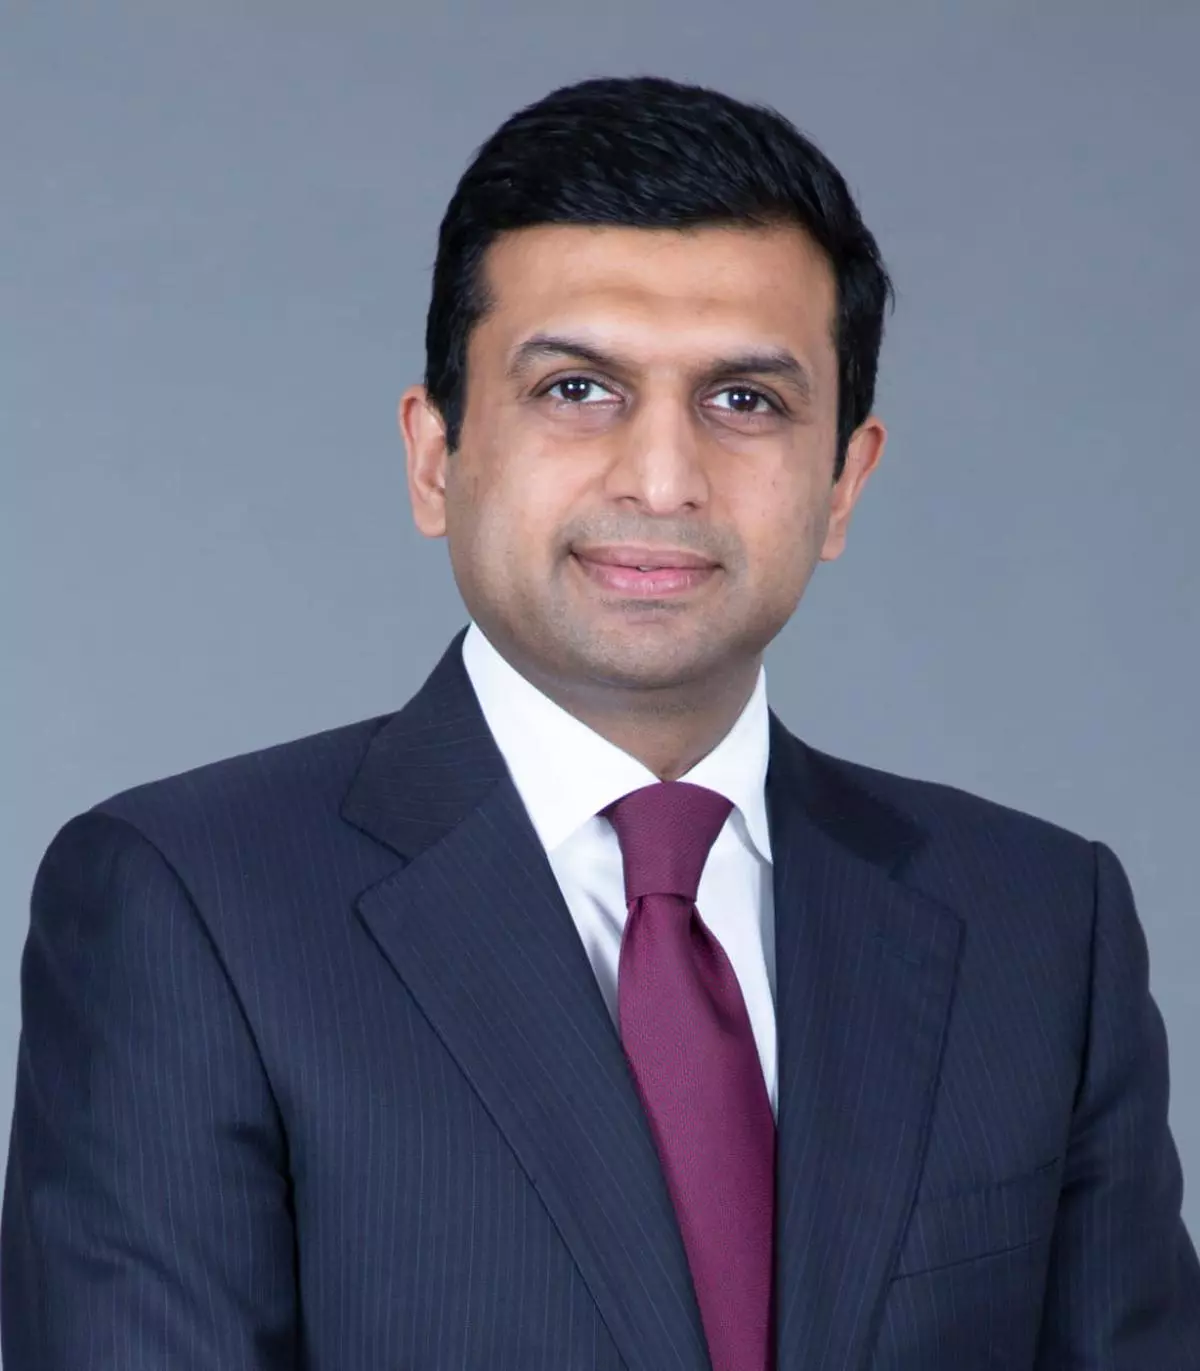 Vineet Agarwal, Managing Director TCI